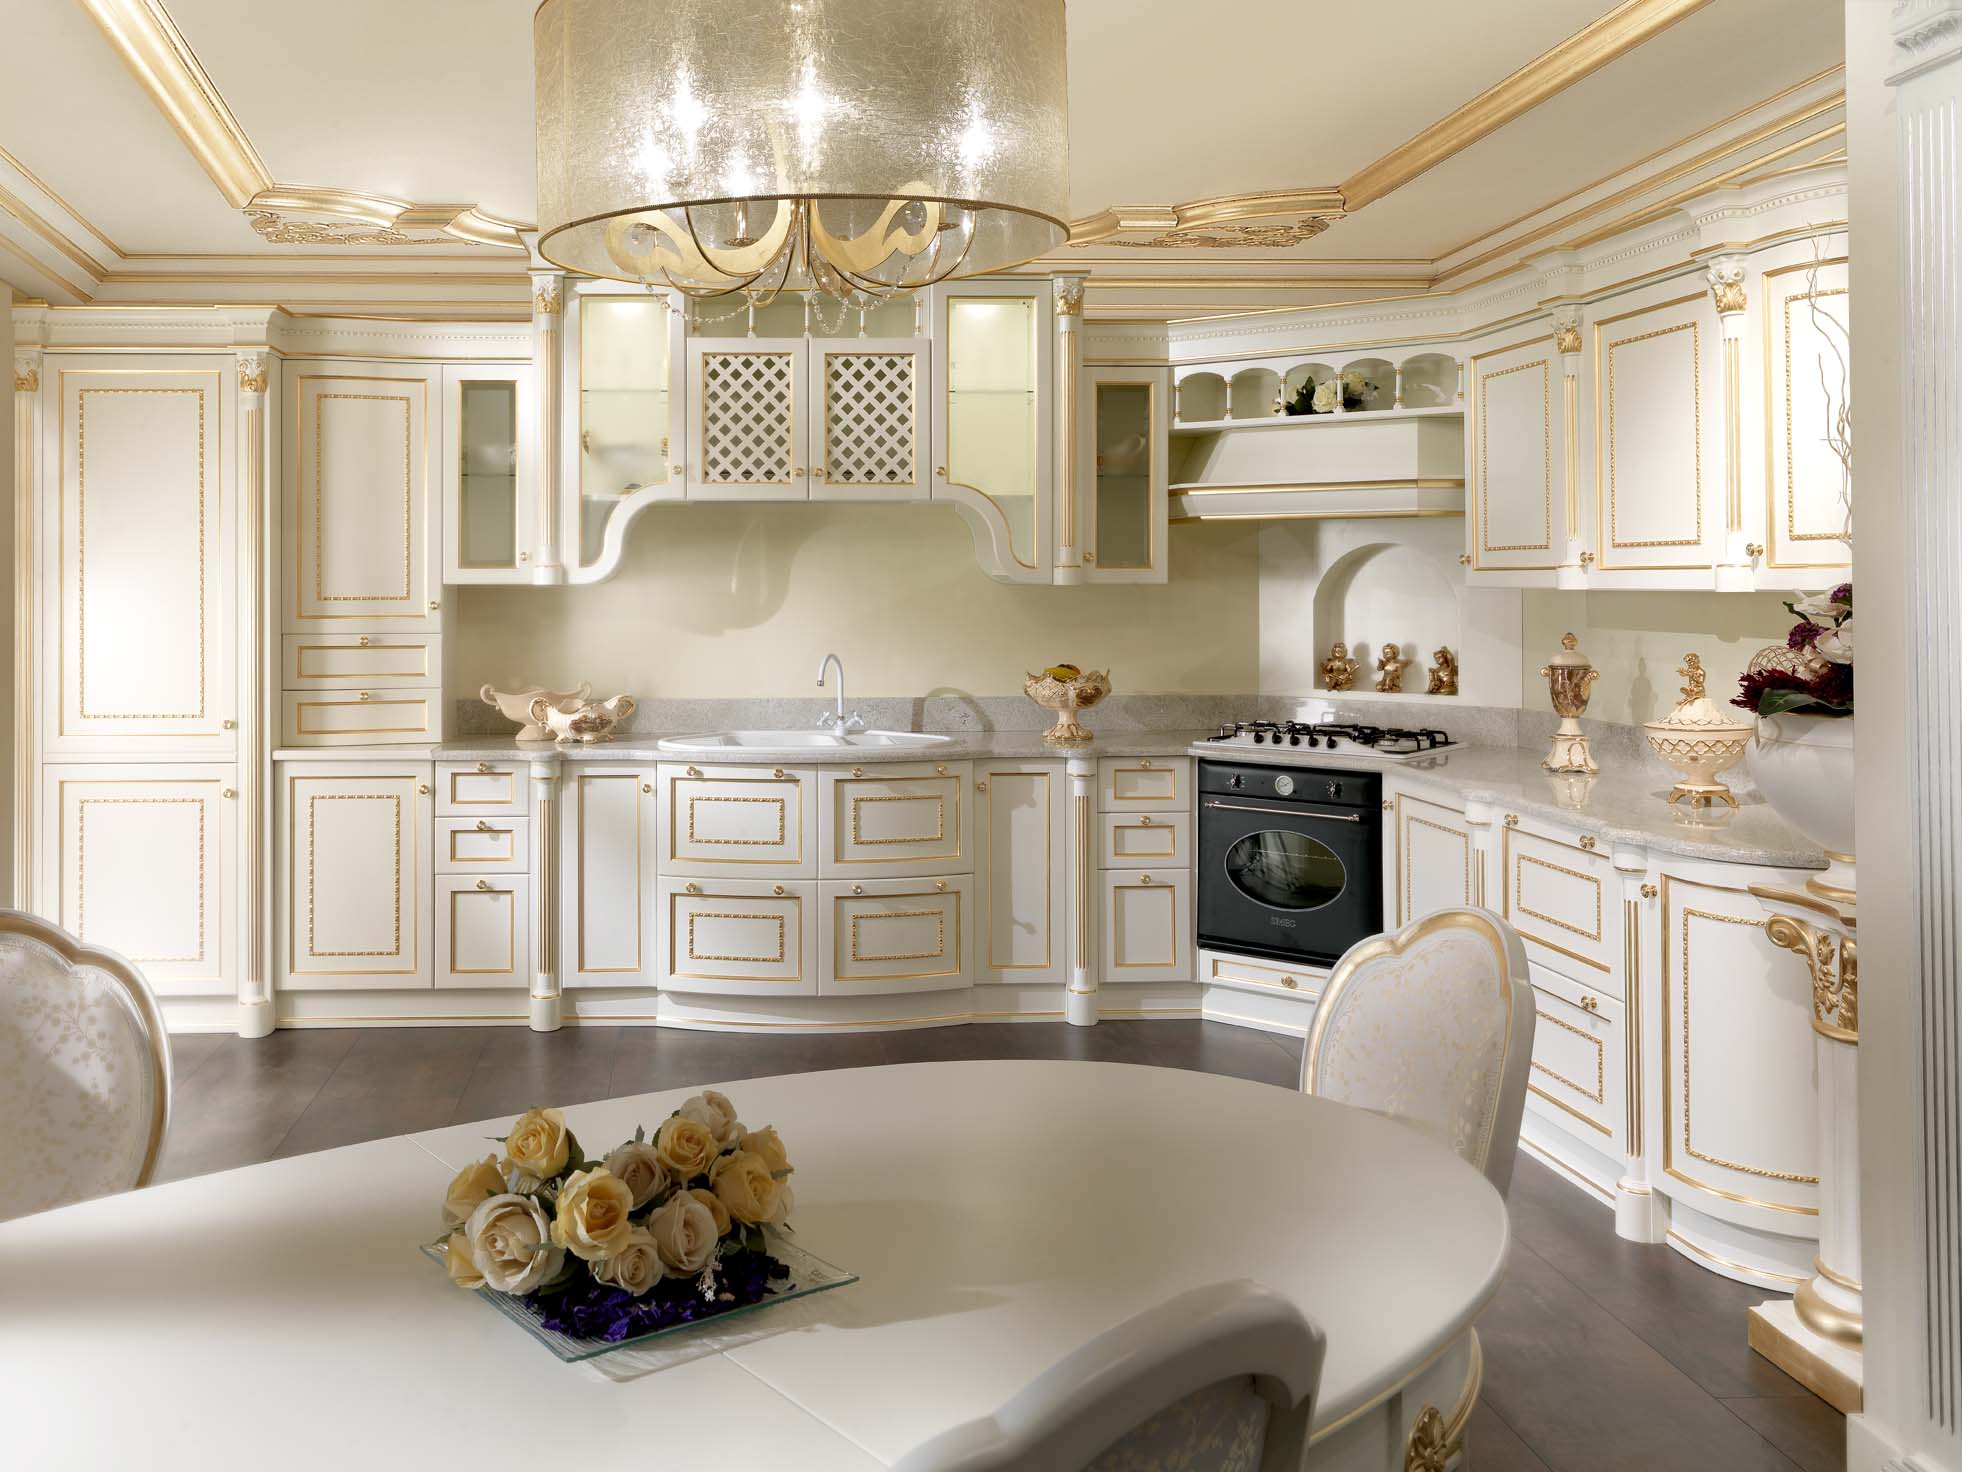 White kitchen interior with gilded details.